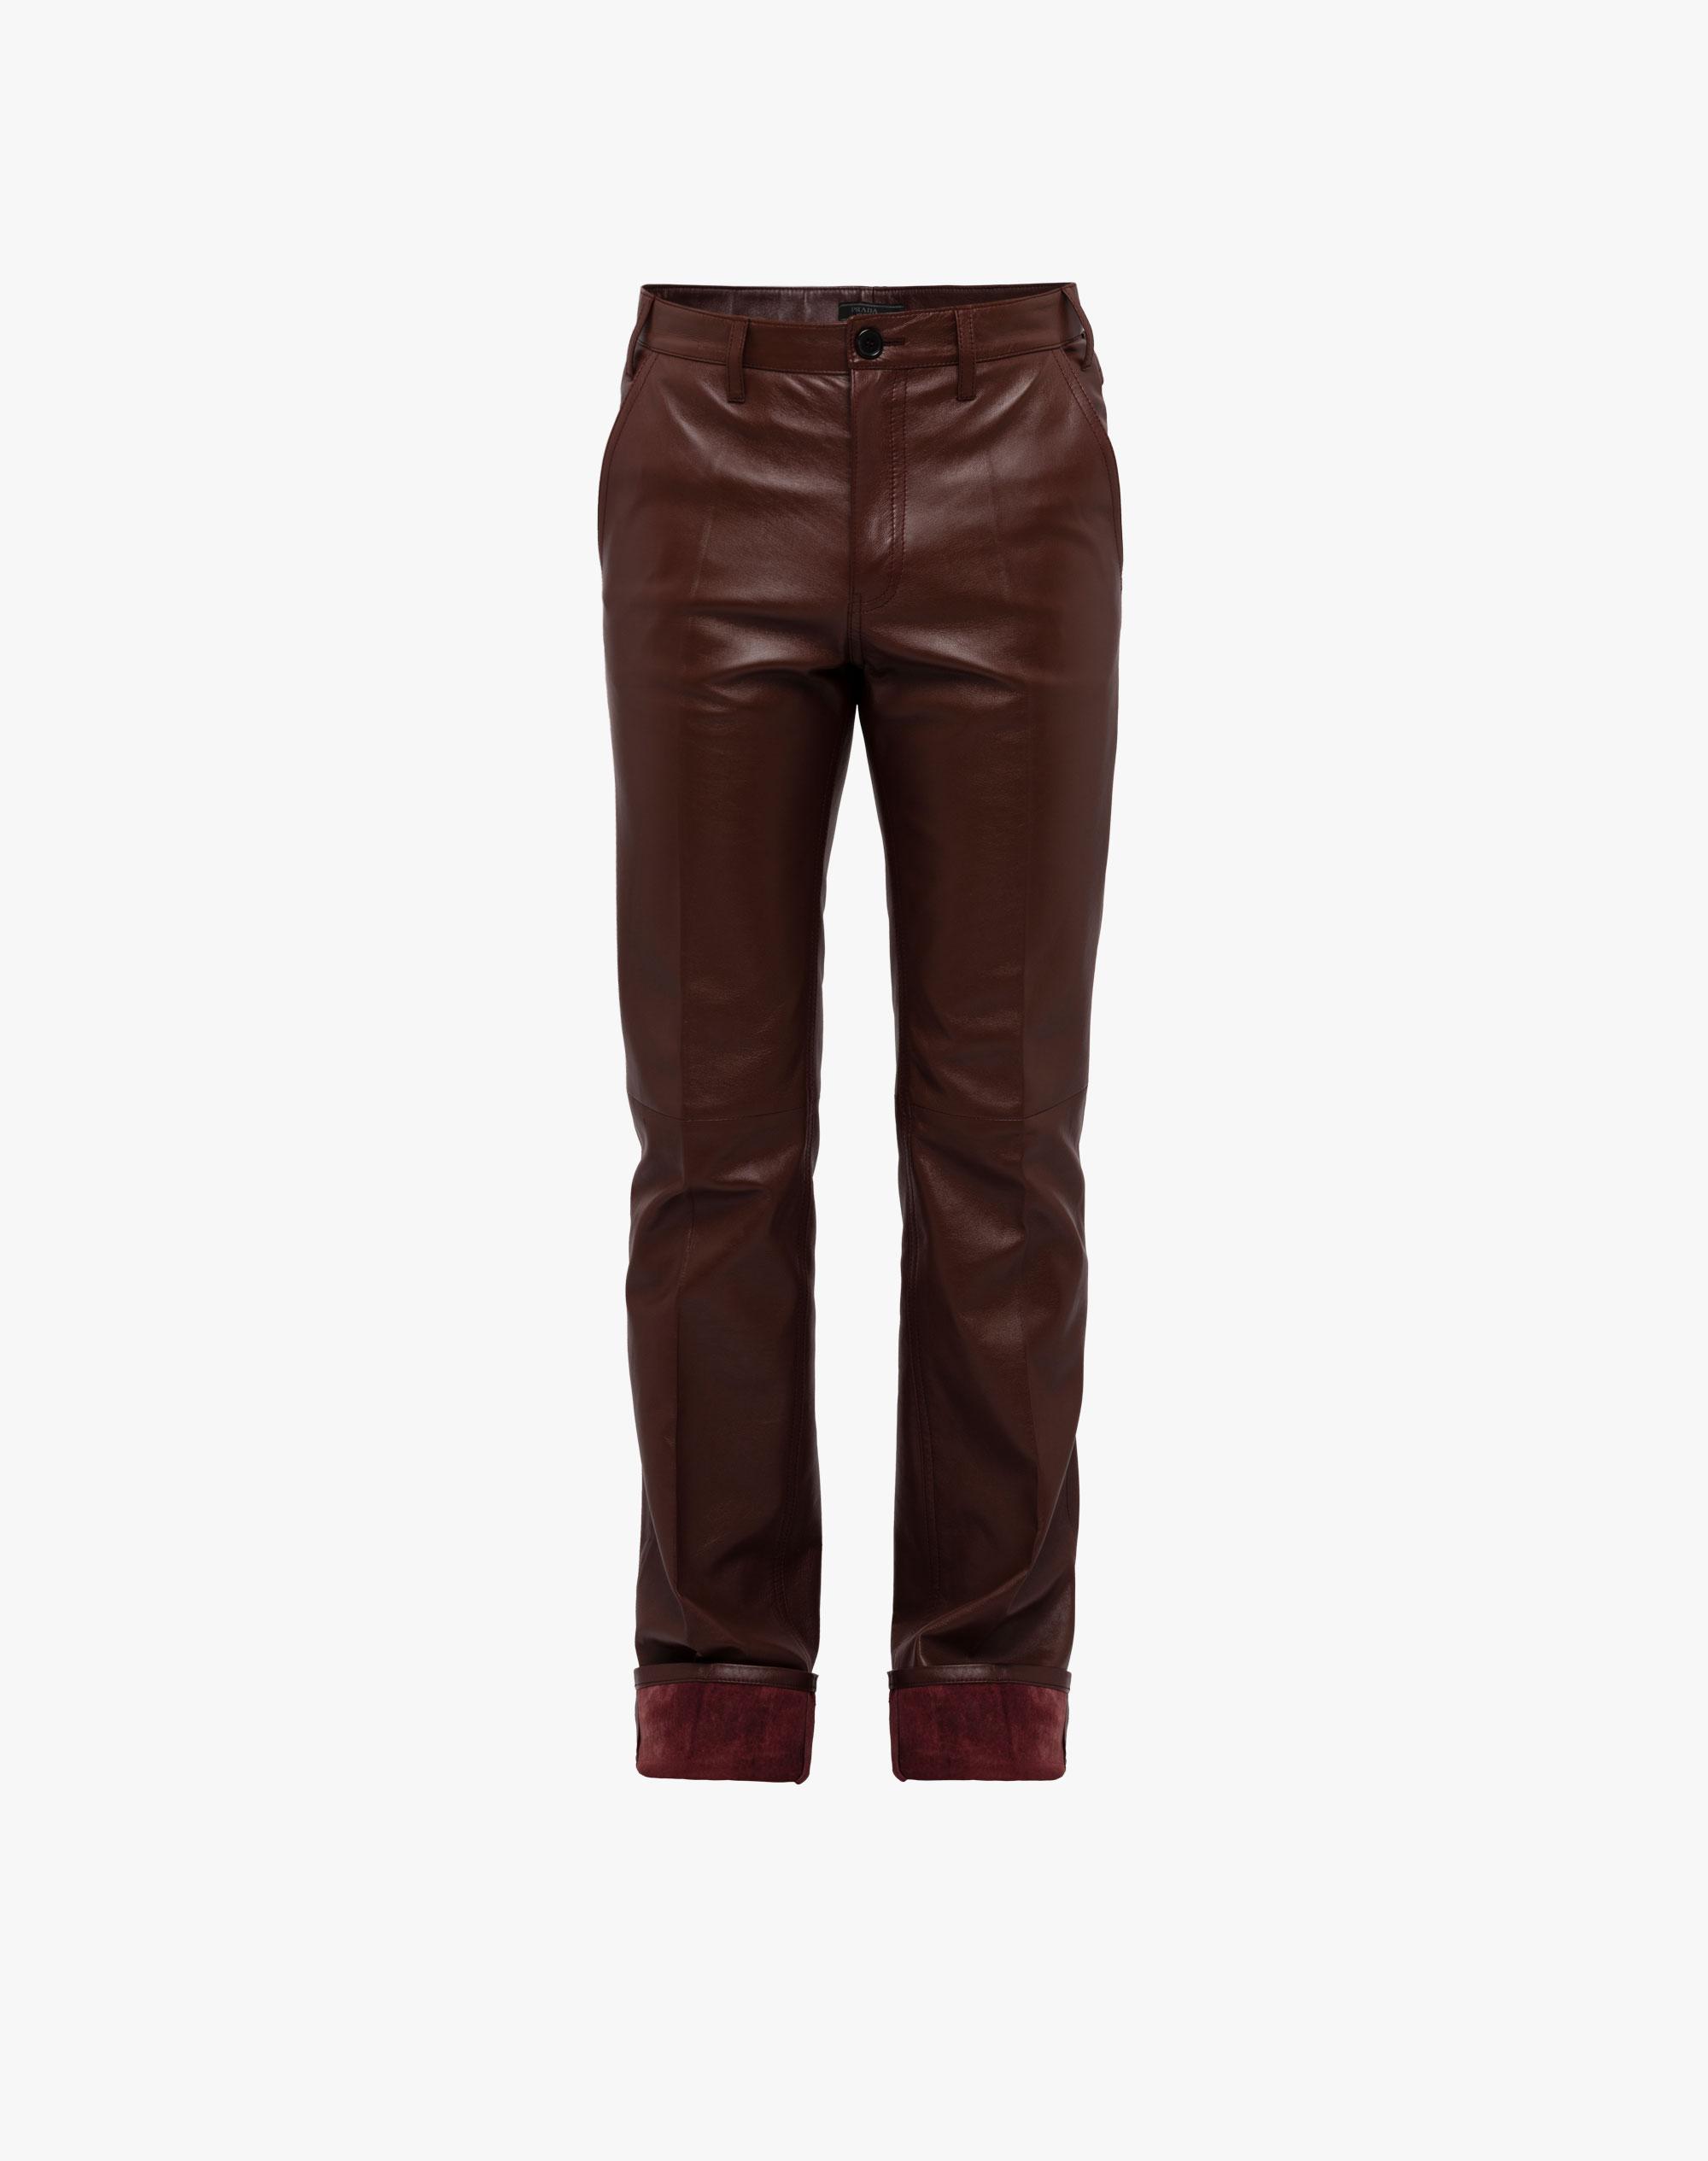 prada leather pants